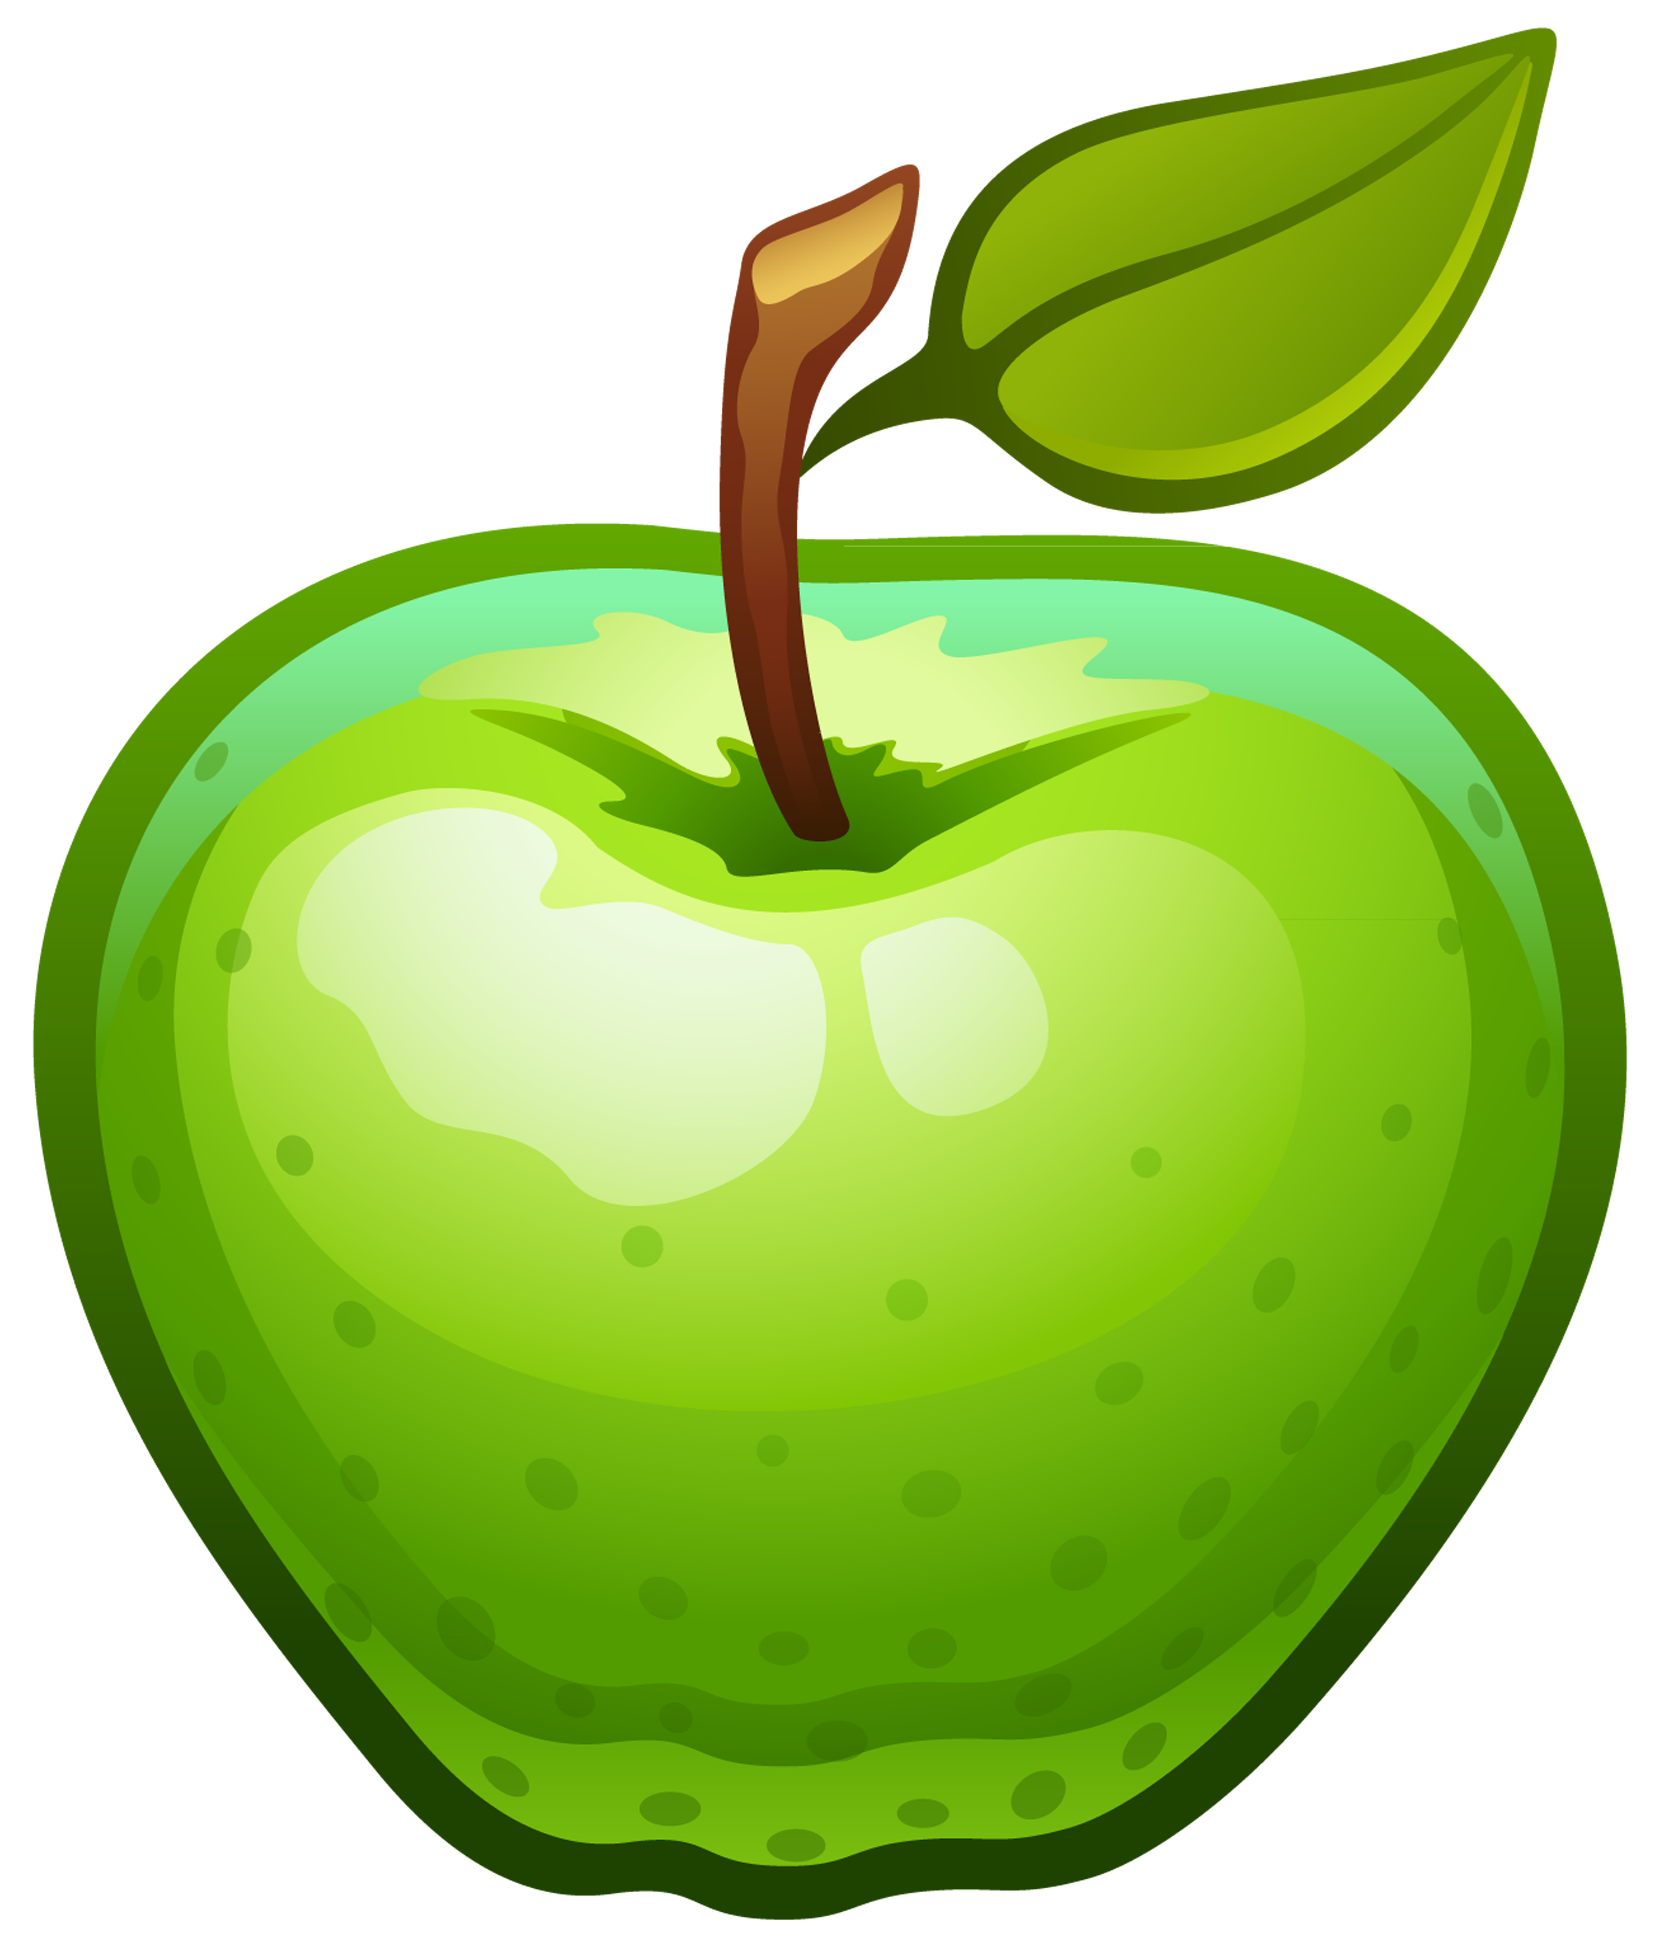 Apple fruit clipart